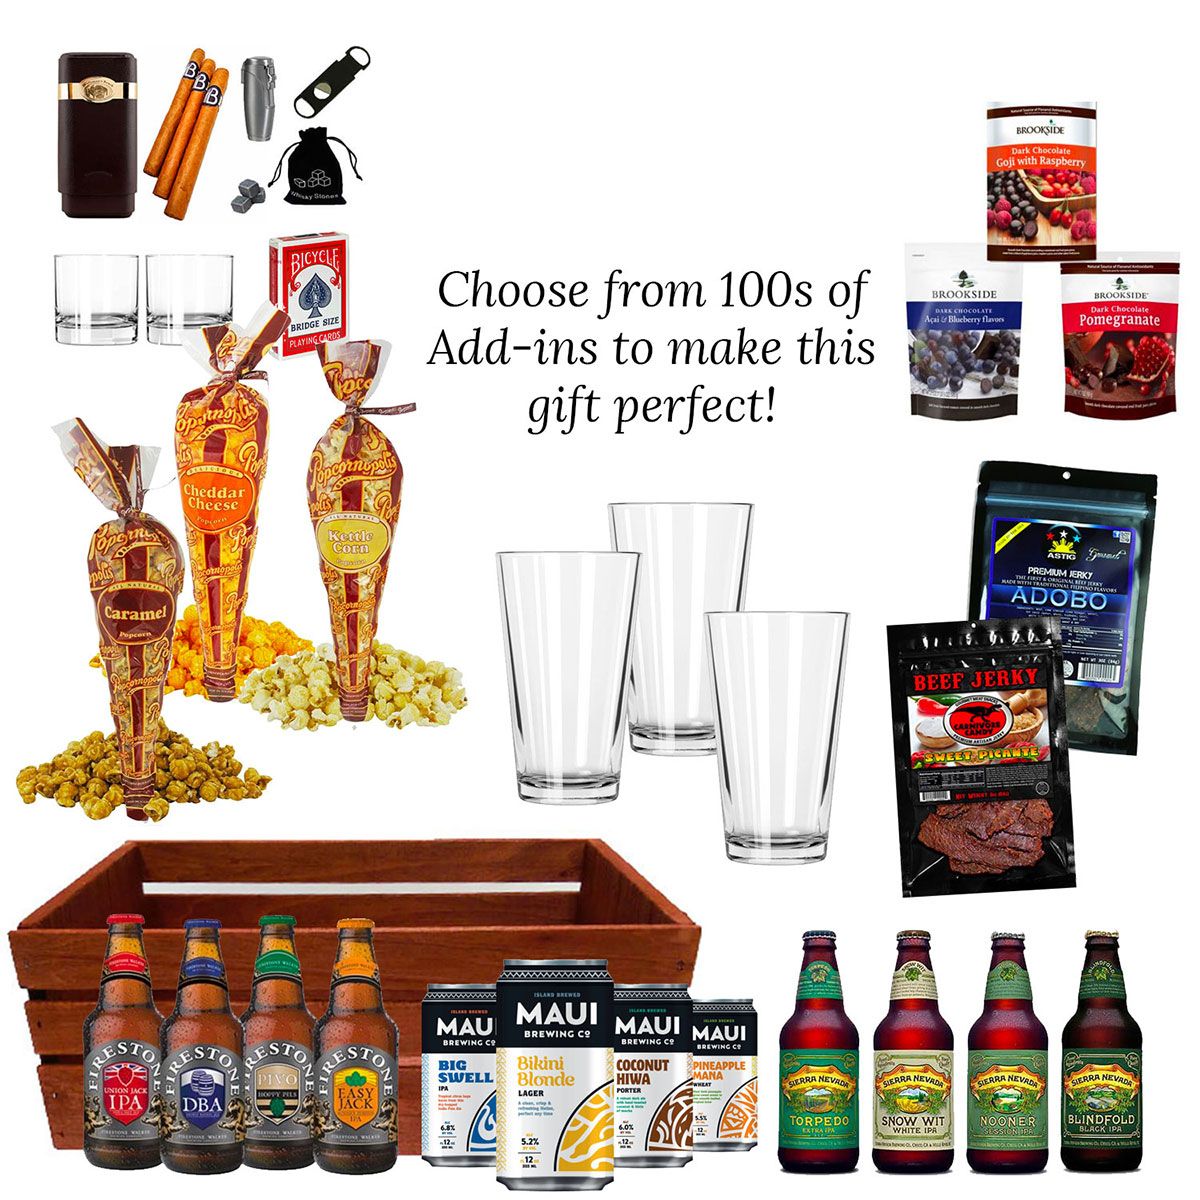 https://beerclubgift.com/assets/images/gifts/make-your-own-beer-gift-basket/main/make-your-own-beer-gift-basket_1200.jpg